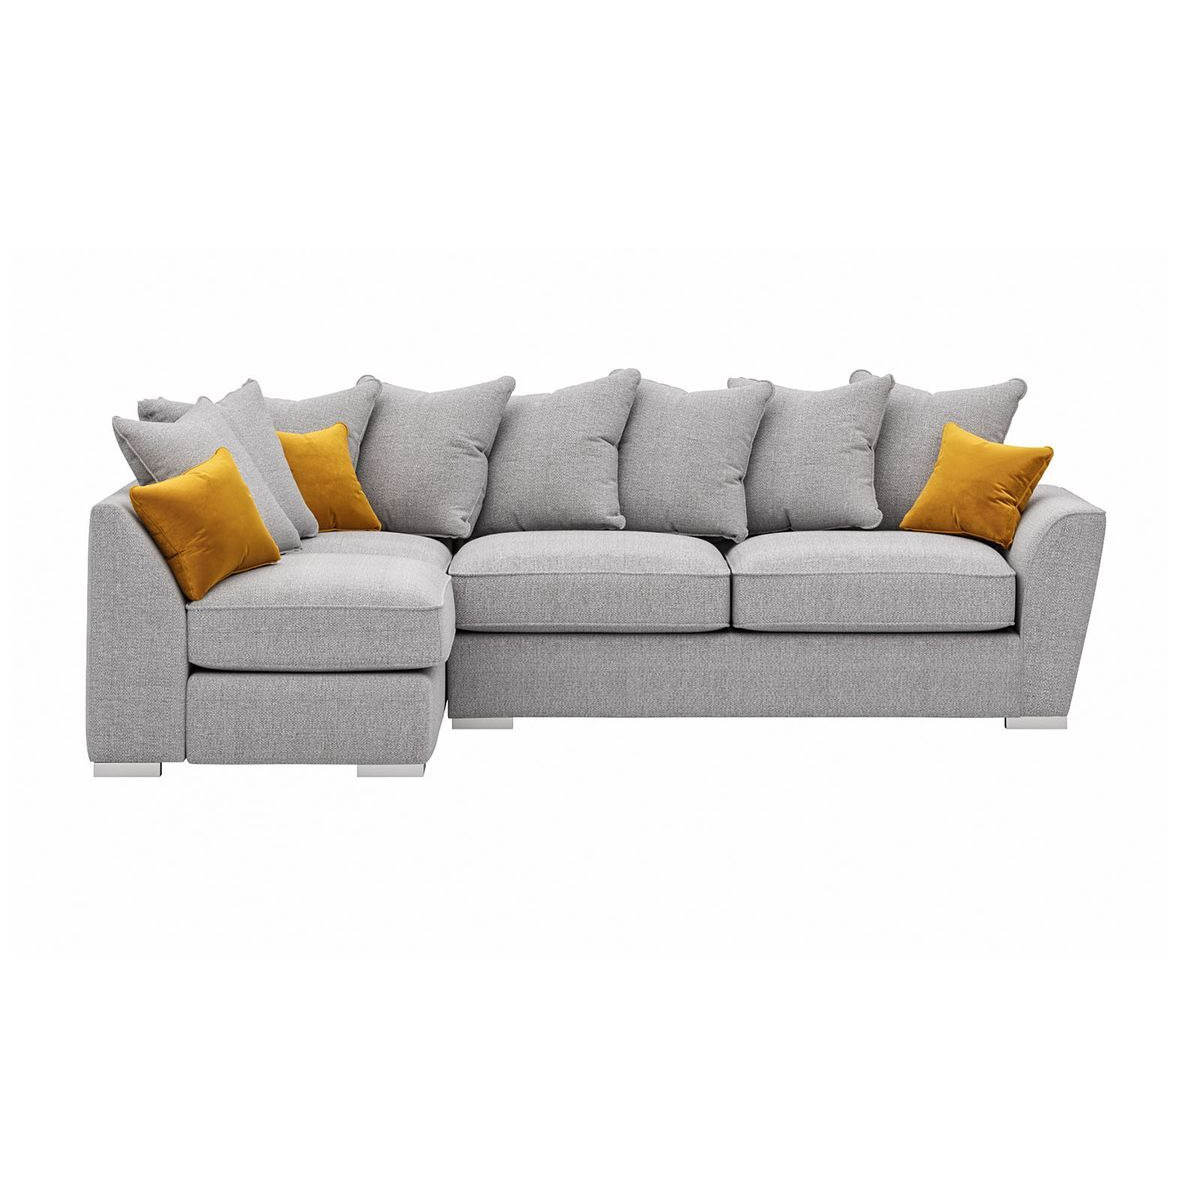 Majestic New Left Hand Corner Sofa with Loose Back Cushions, light grey/mustard - image 1